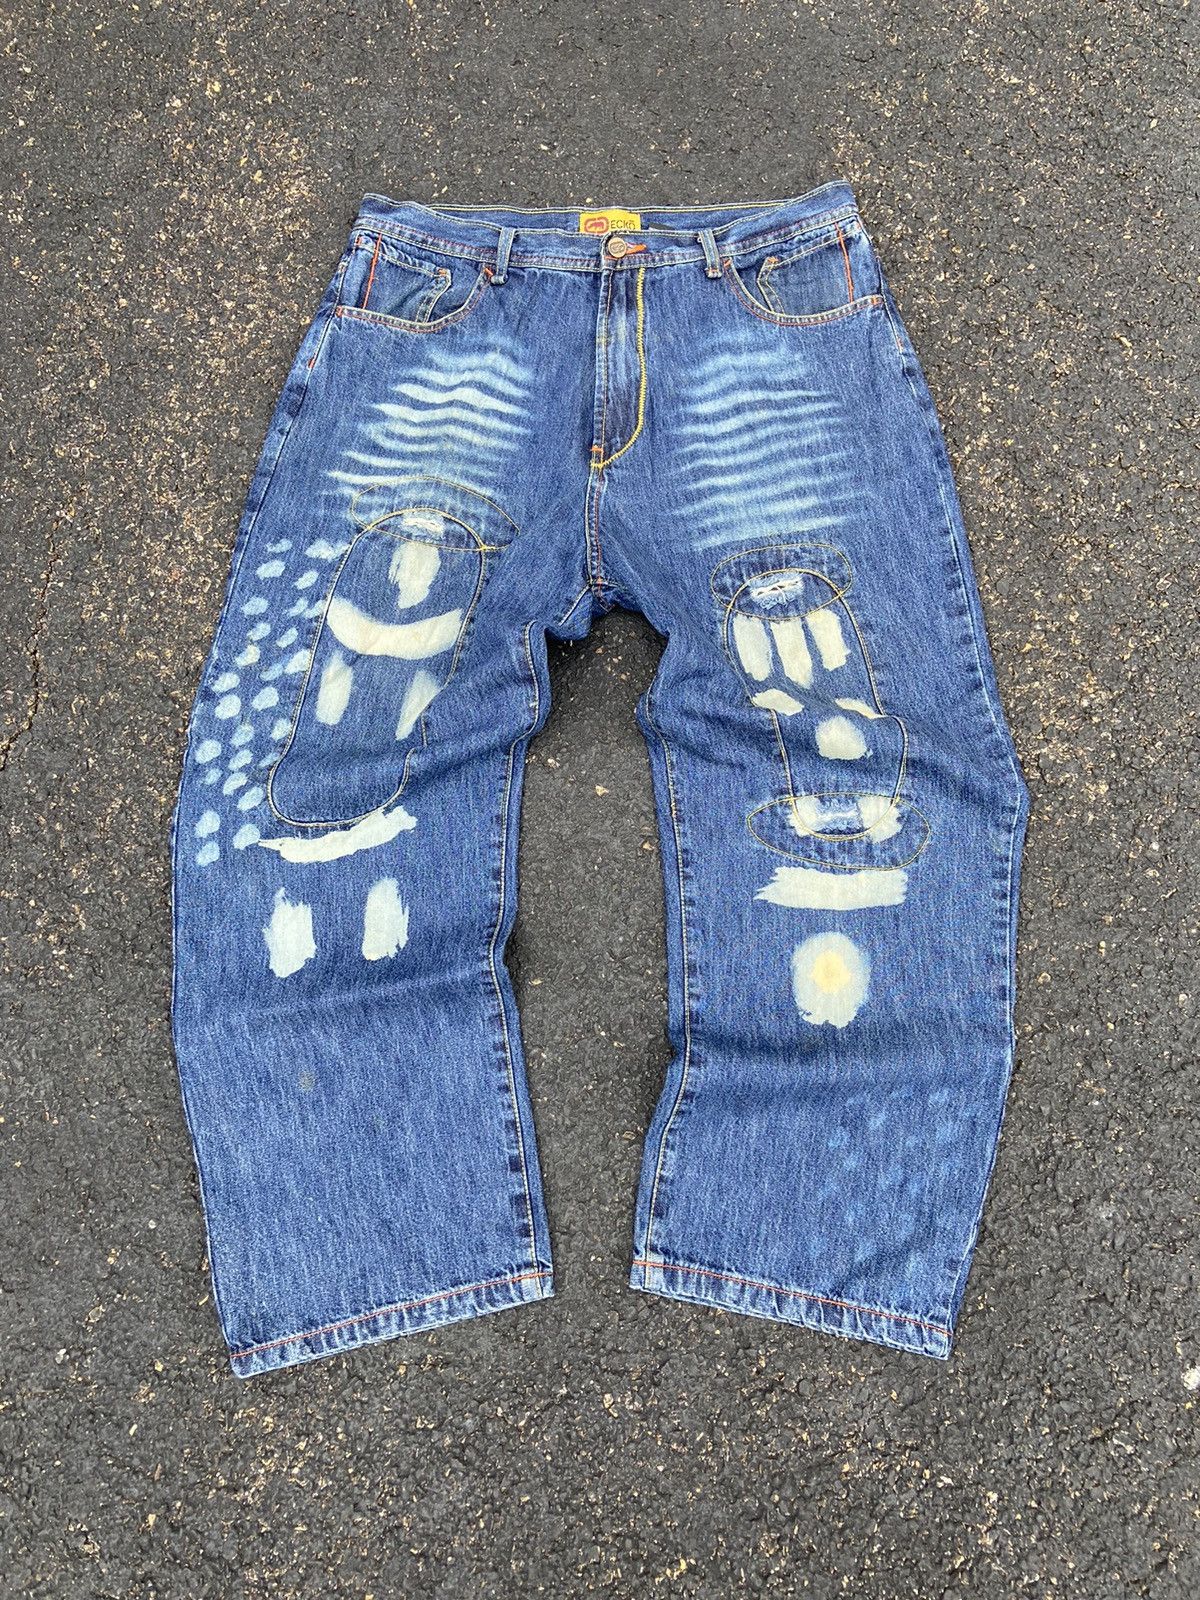 Ecko Unltd. Crazy Baggy Y2K Skater Style Wide Leg Ecko Blue Jeans | Grailed